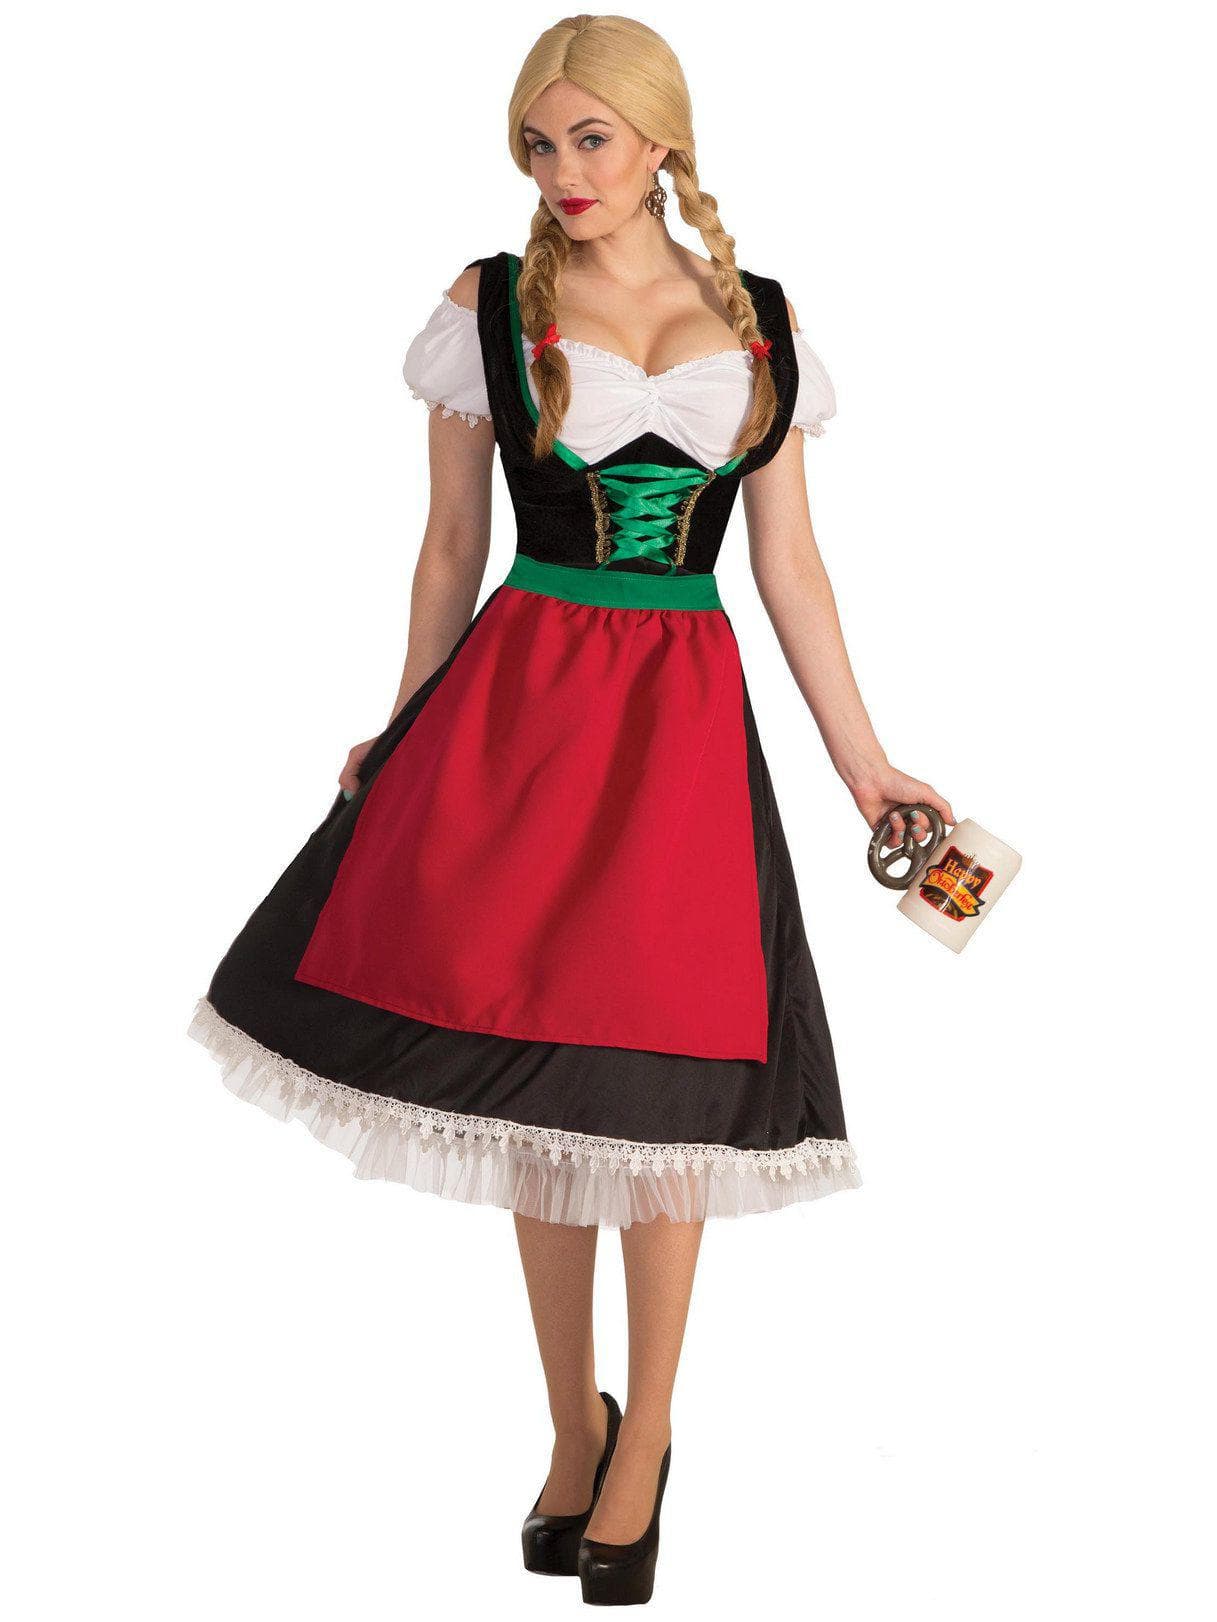 Adult Fraulein Costume - costumes.com